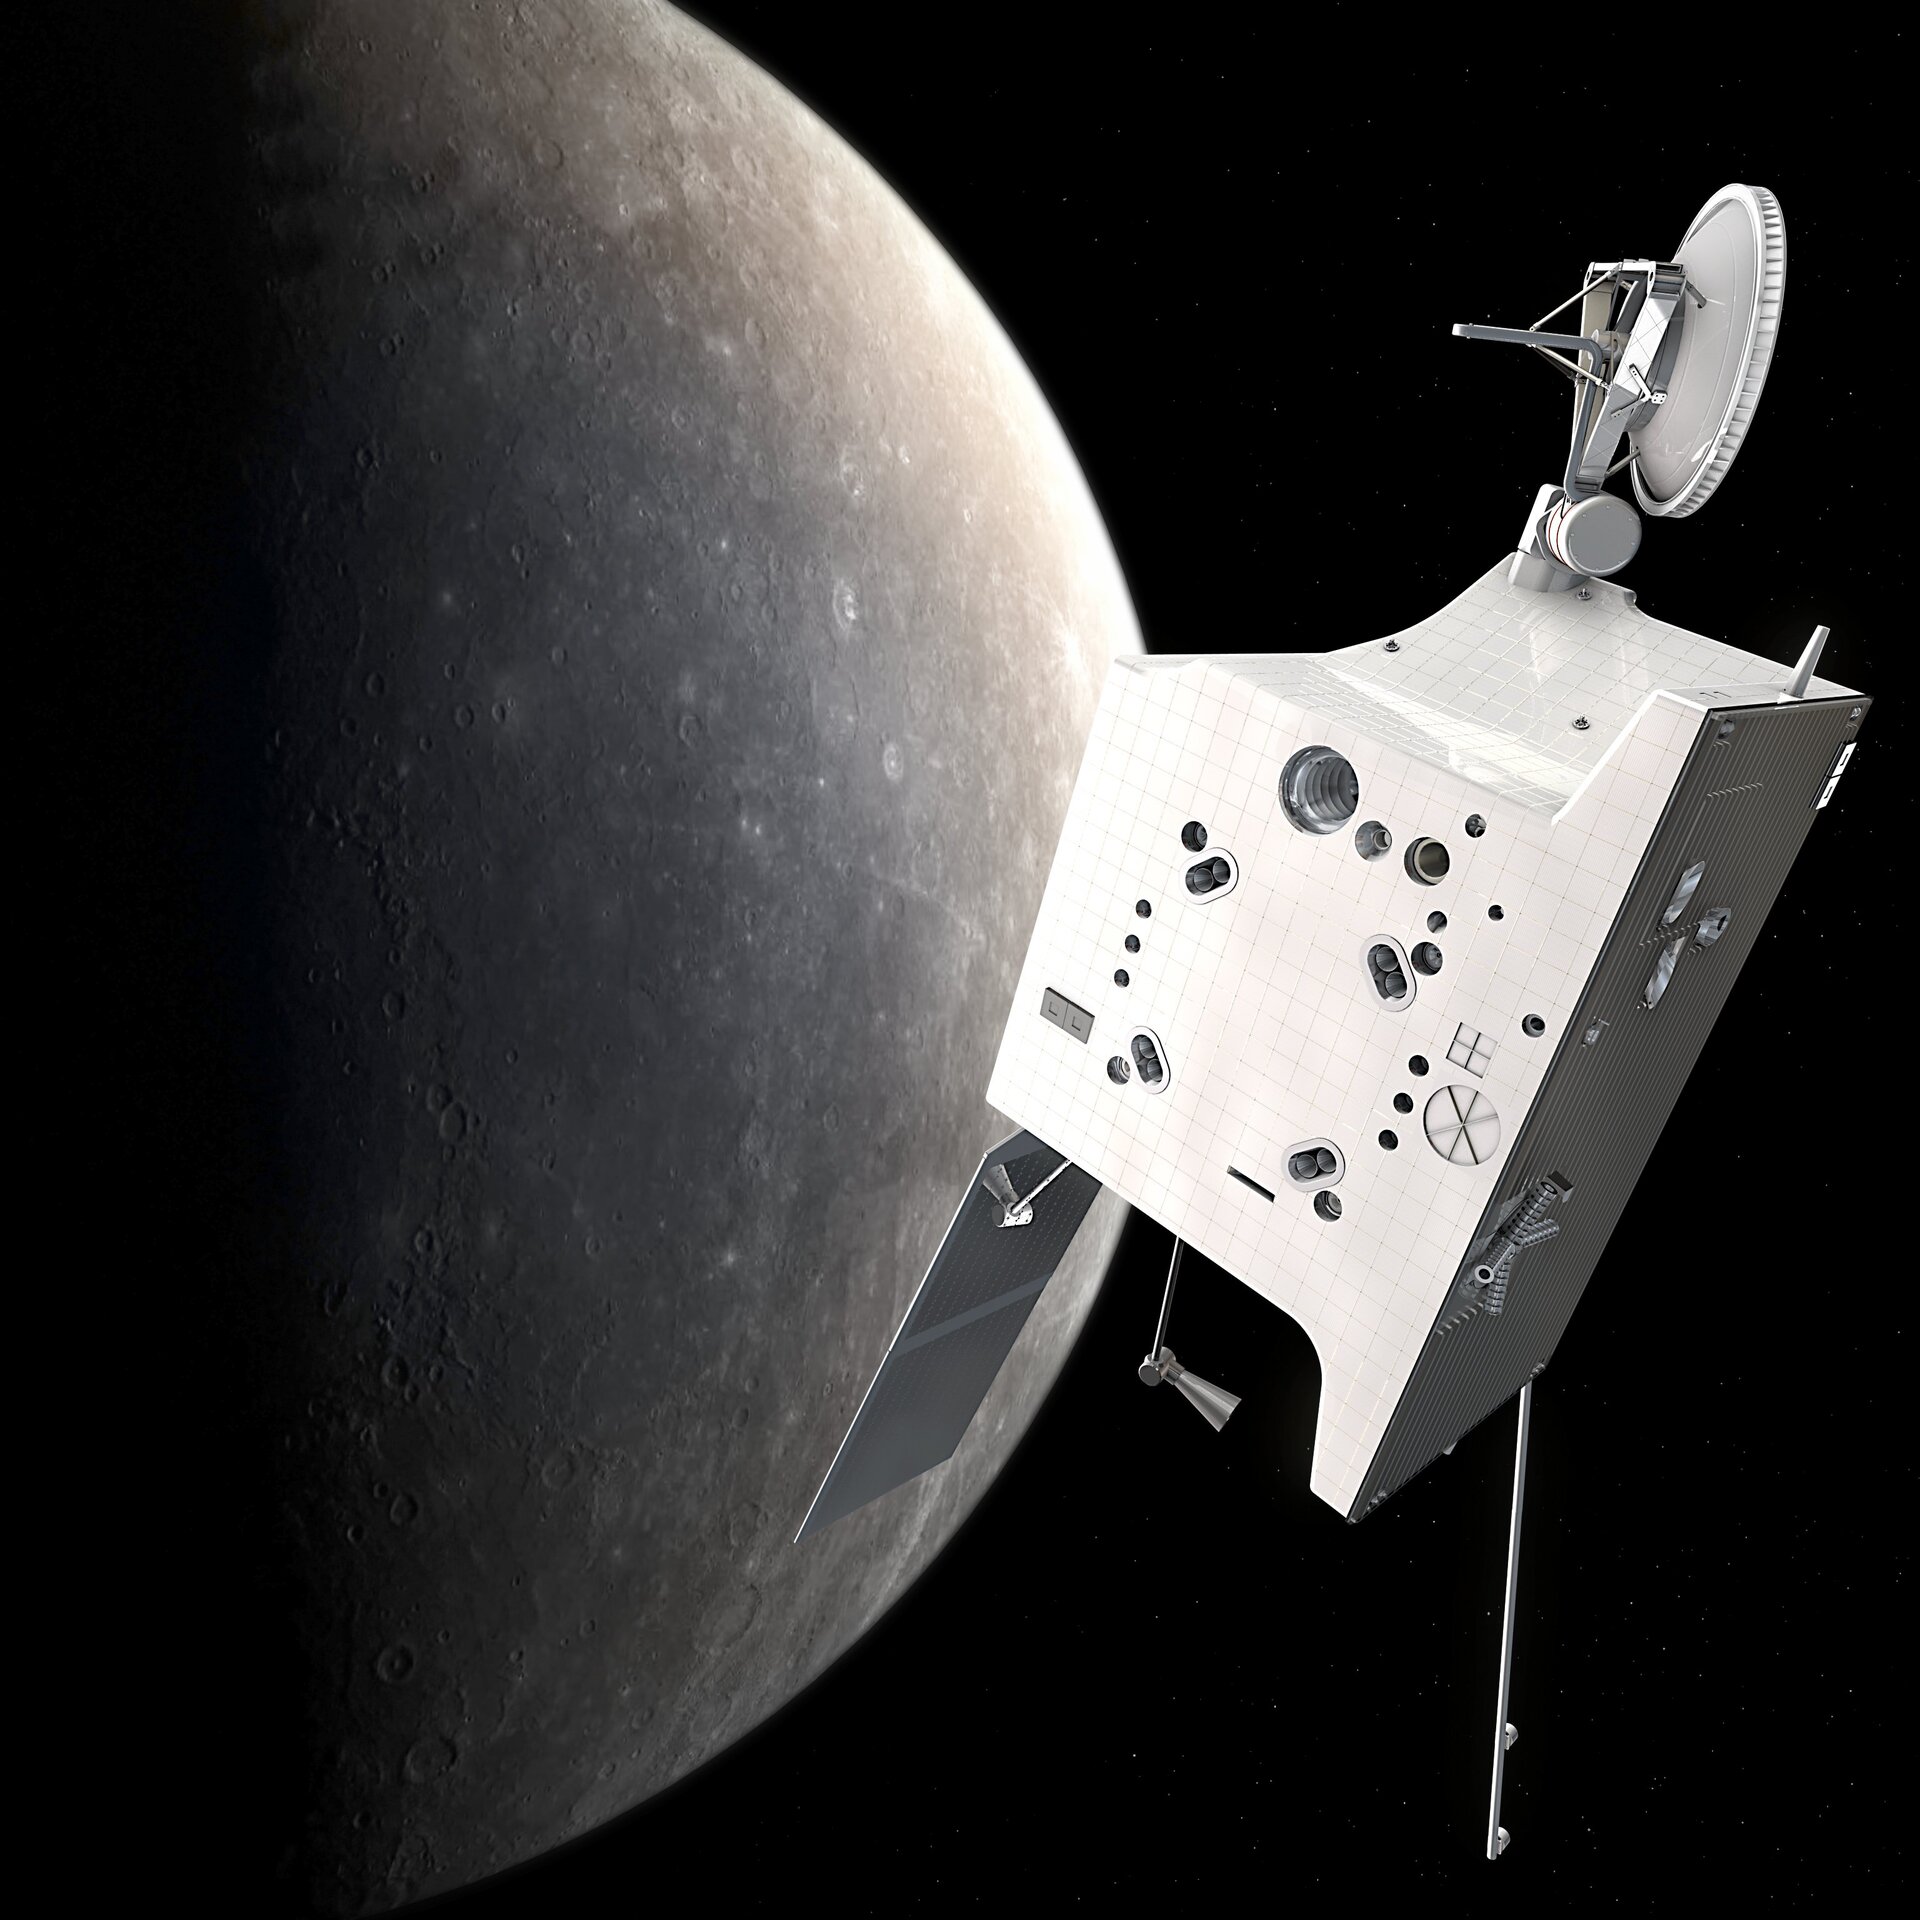 BepiColombo's Mercury Planetary Orbiter